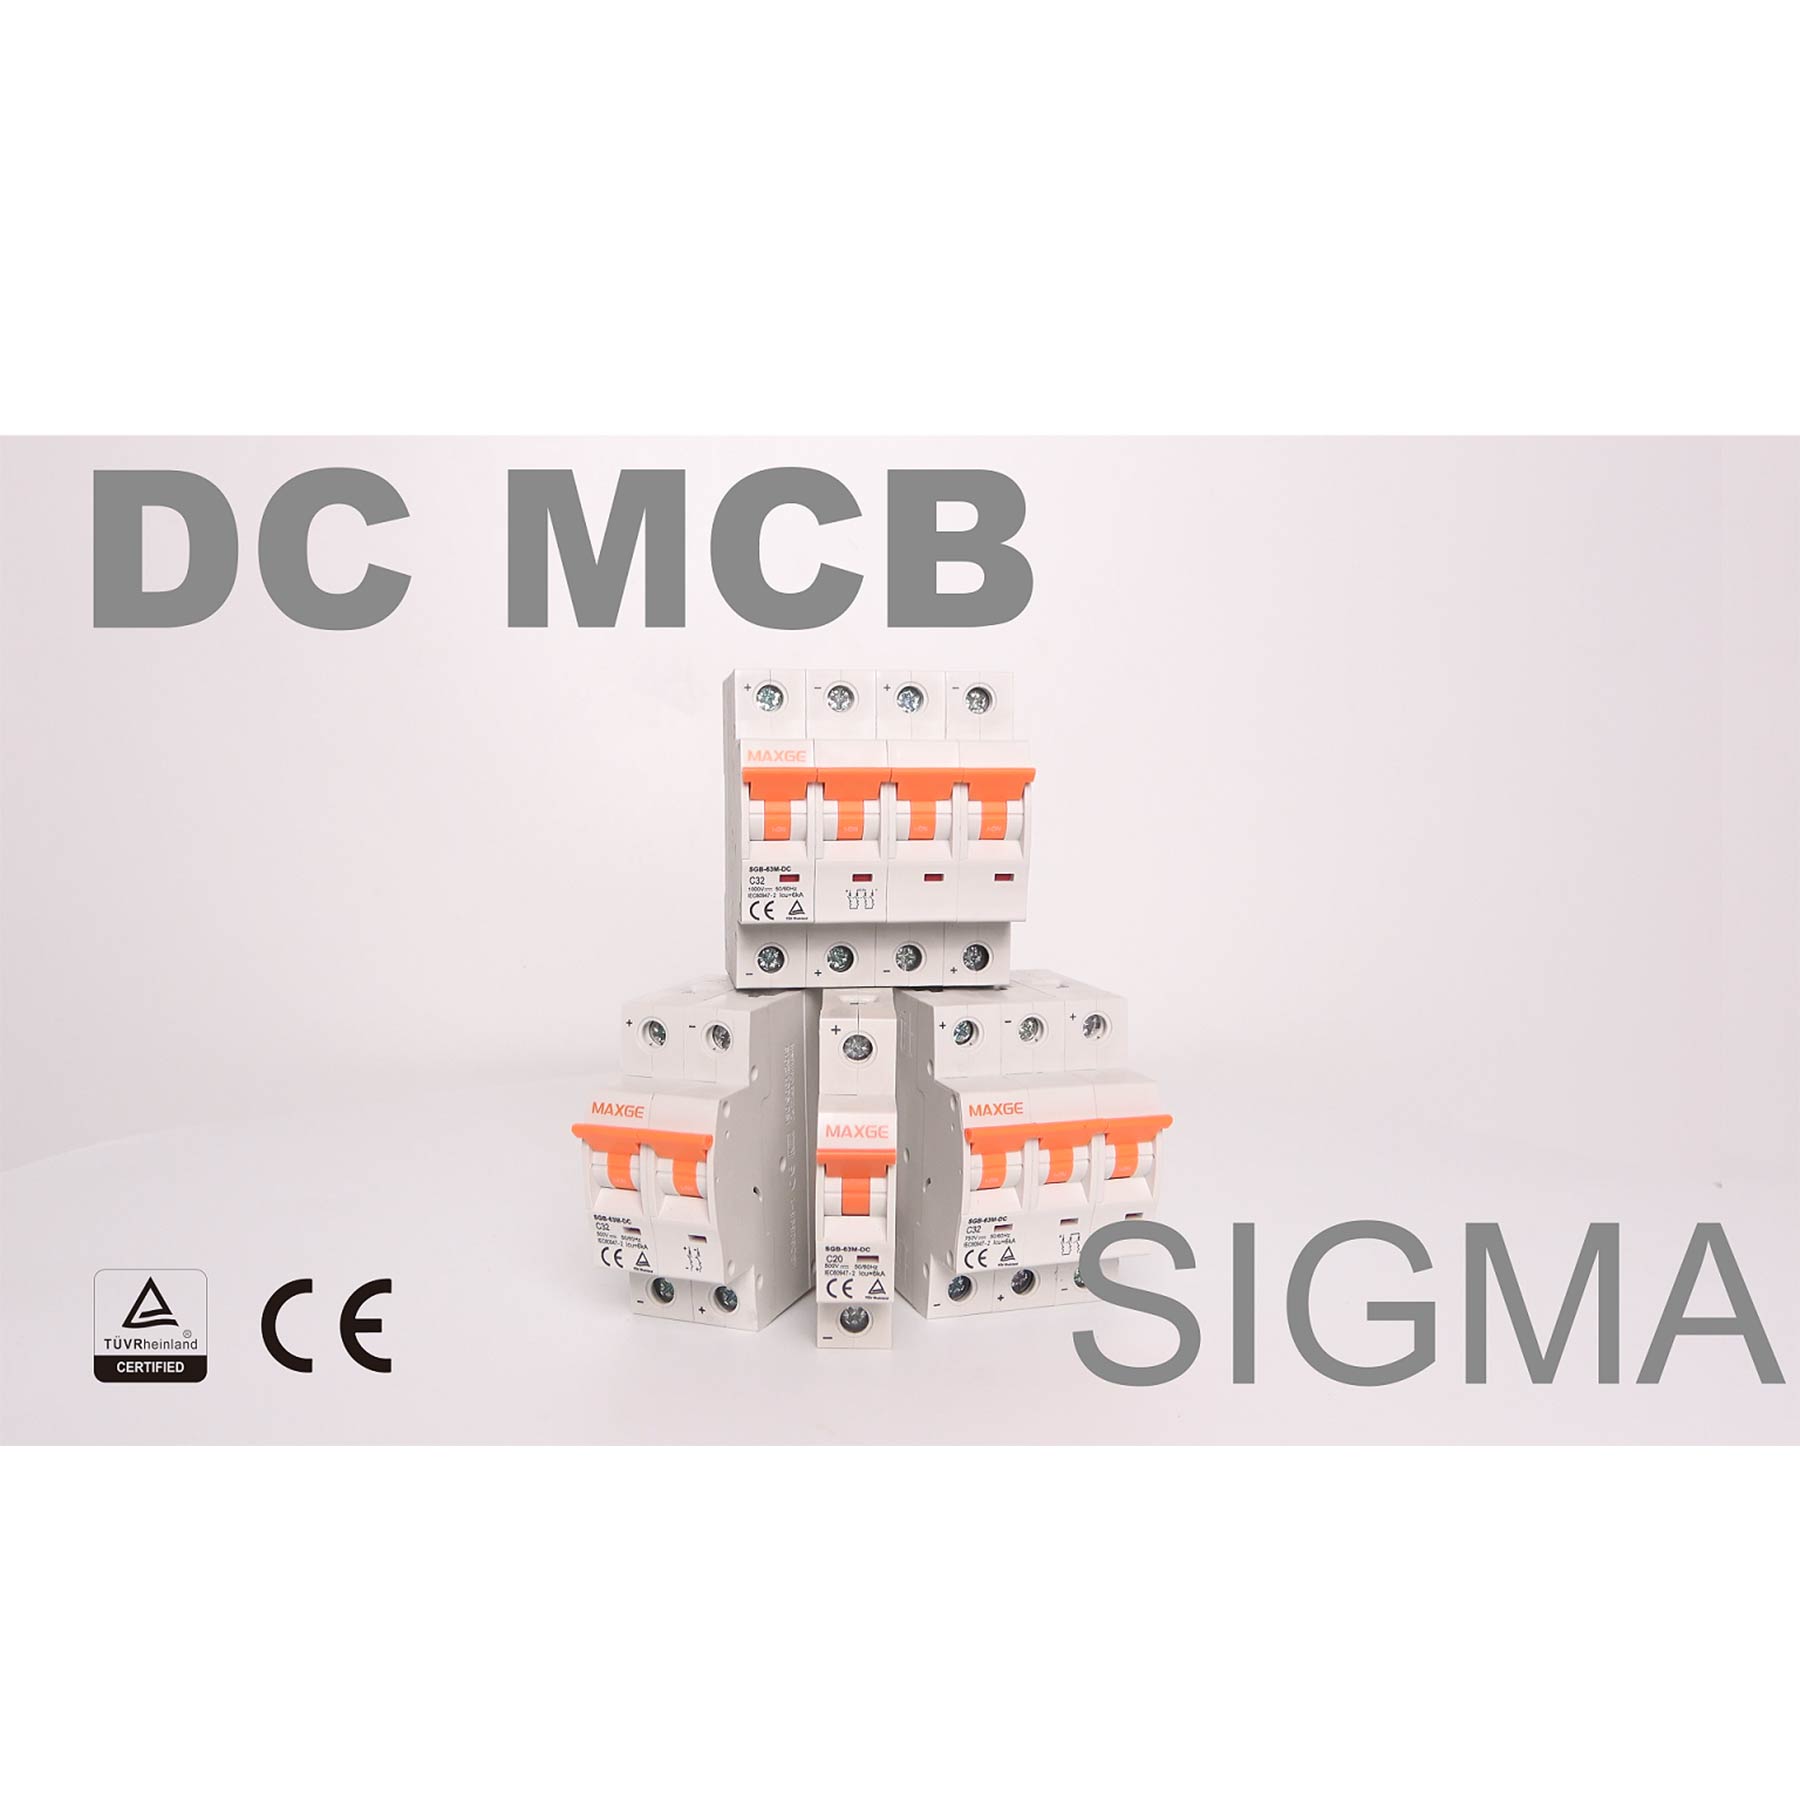 Sigma series：DC MCB introduction